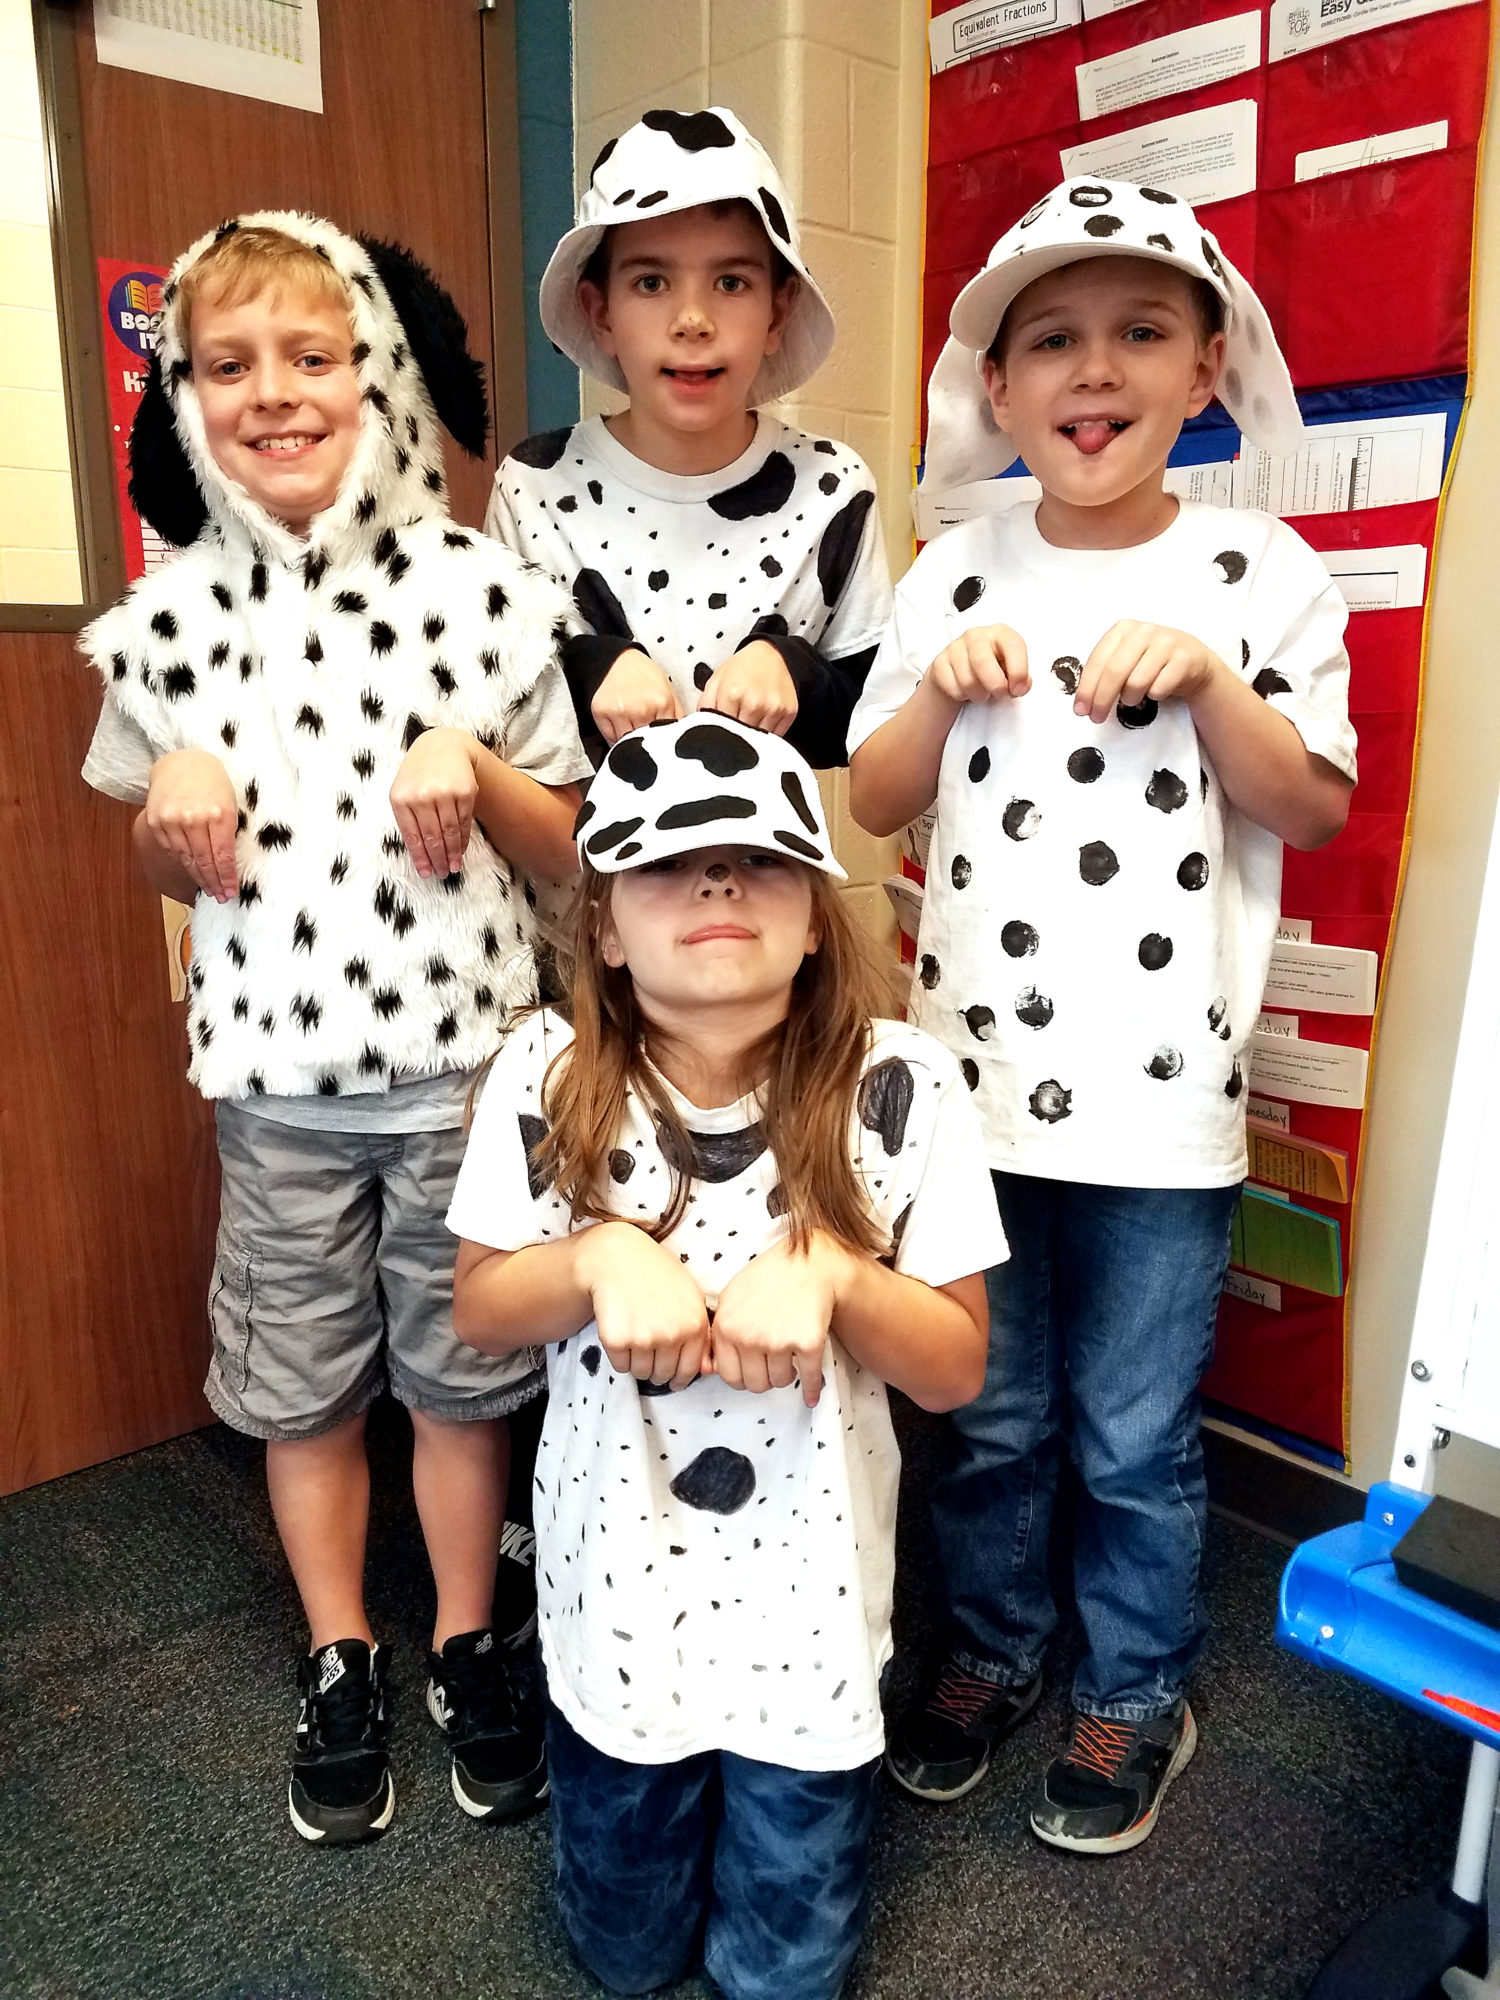 four students dress like 101 dalmatians to celebrate 101 days of school